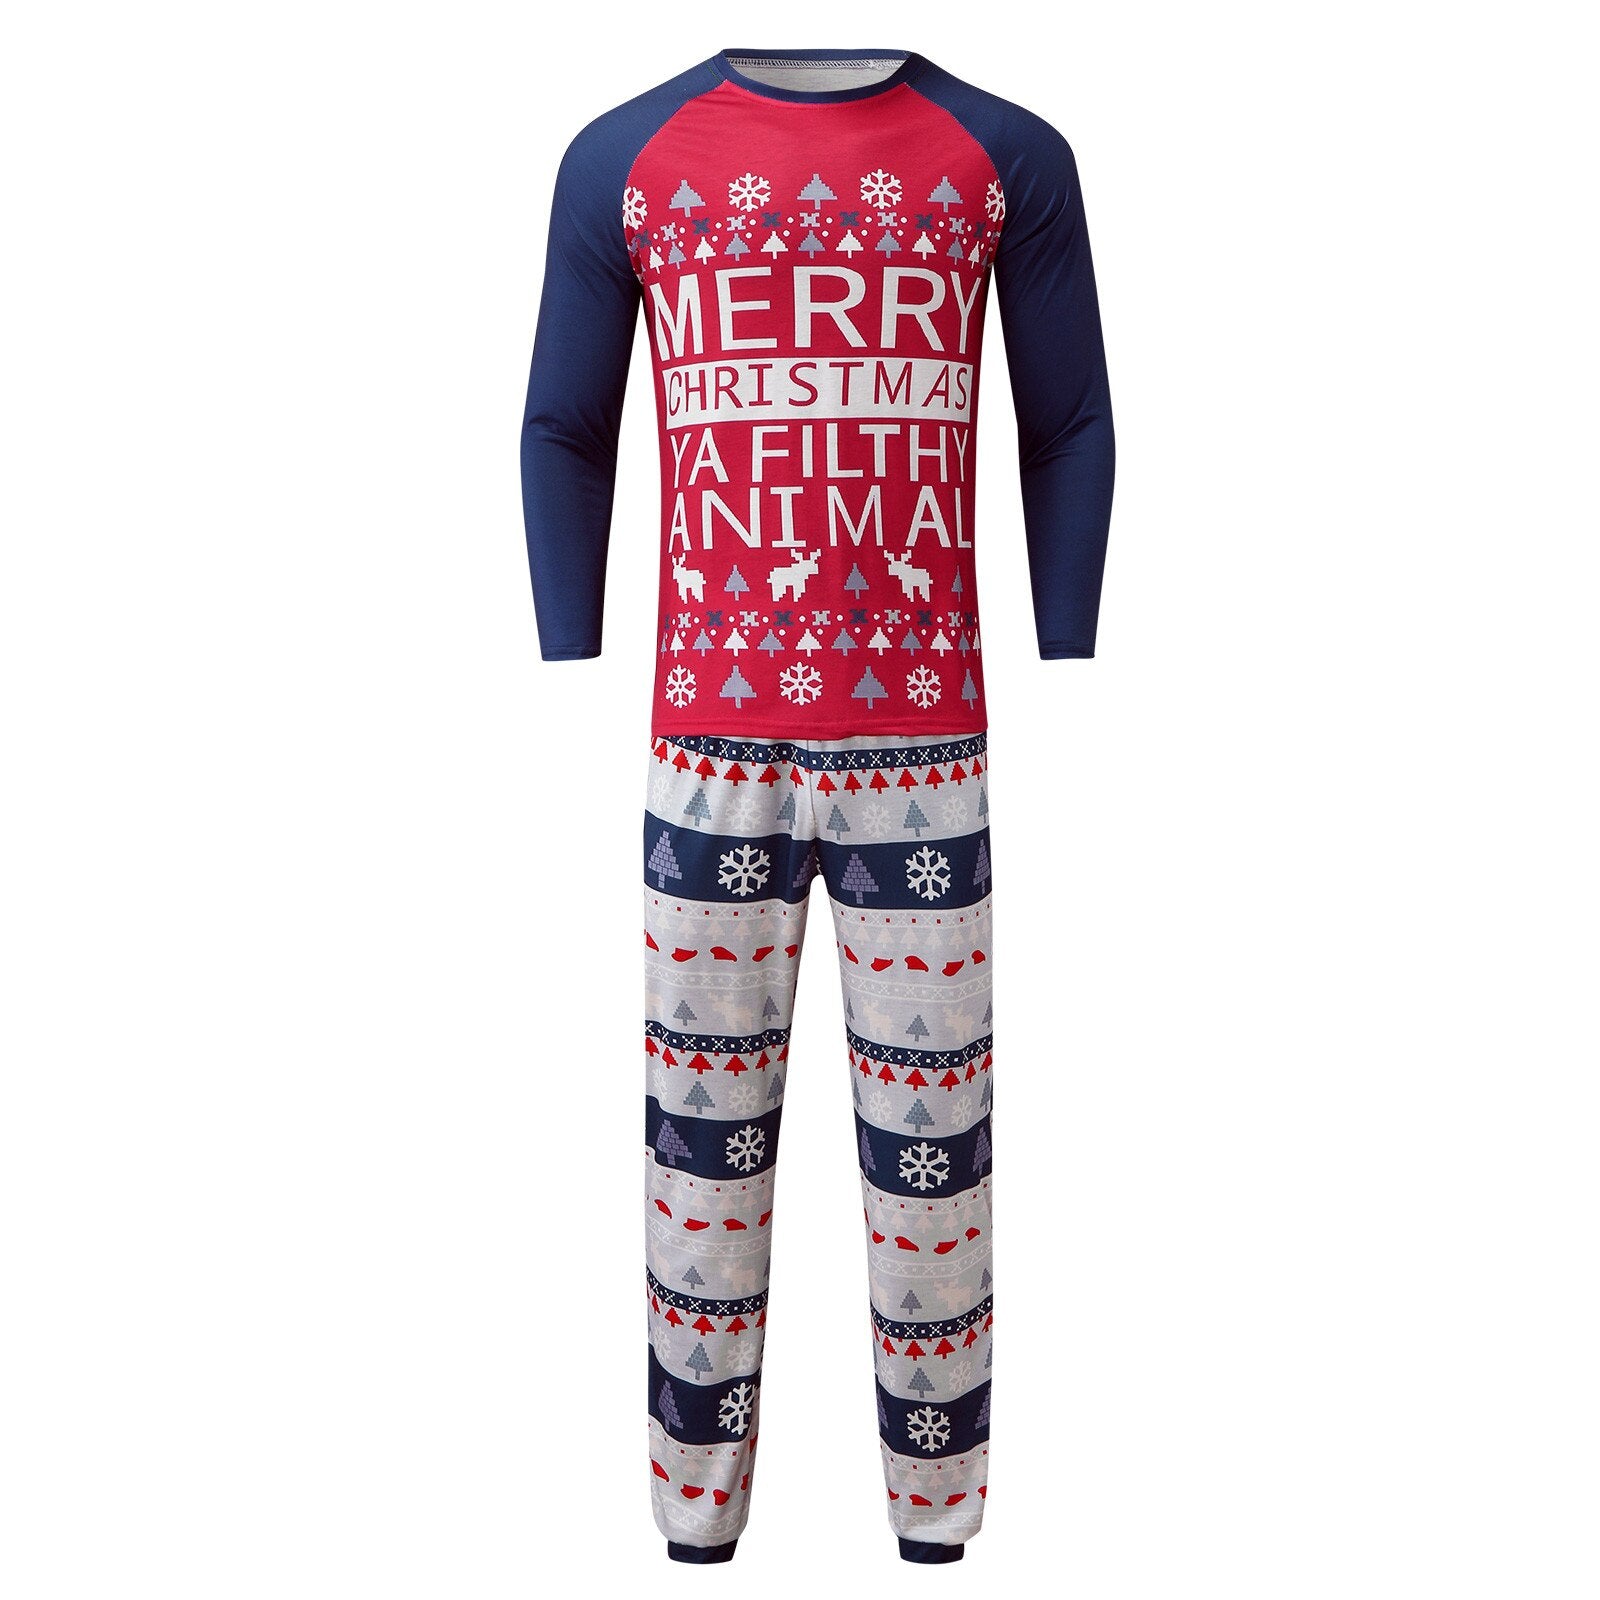 Matching Christmas Pajamas Jumpsuit Family Set - Filthy Animal